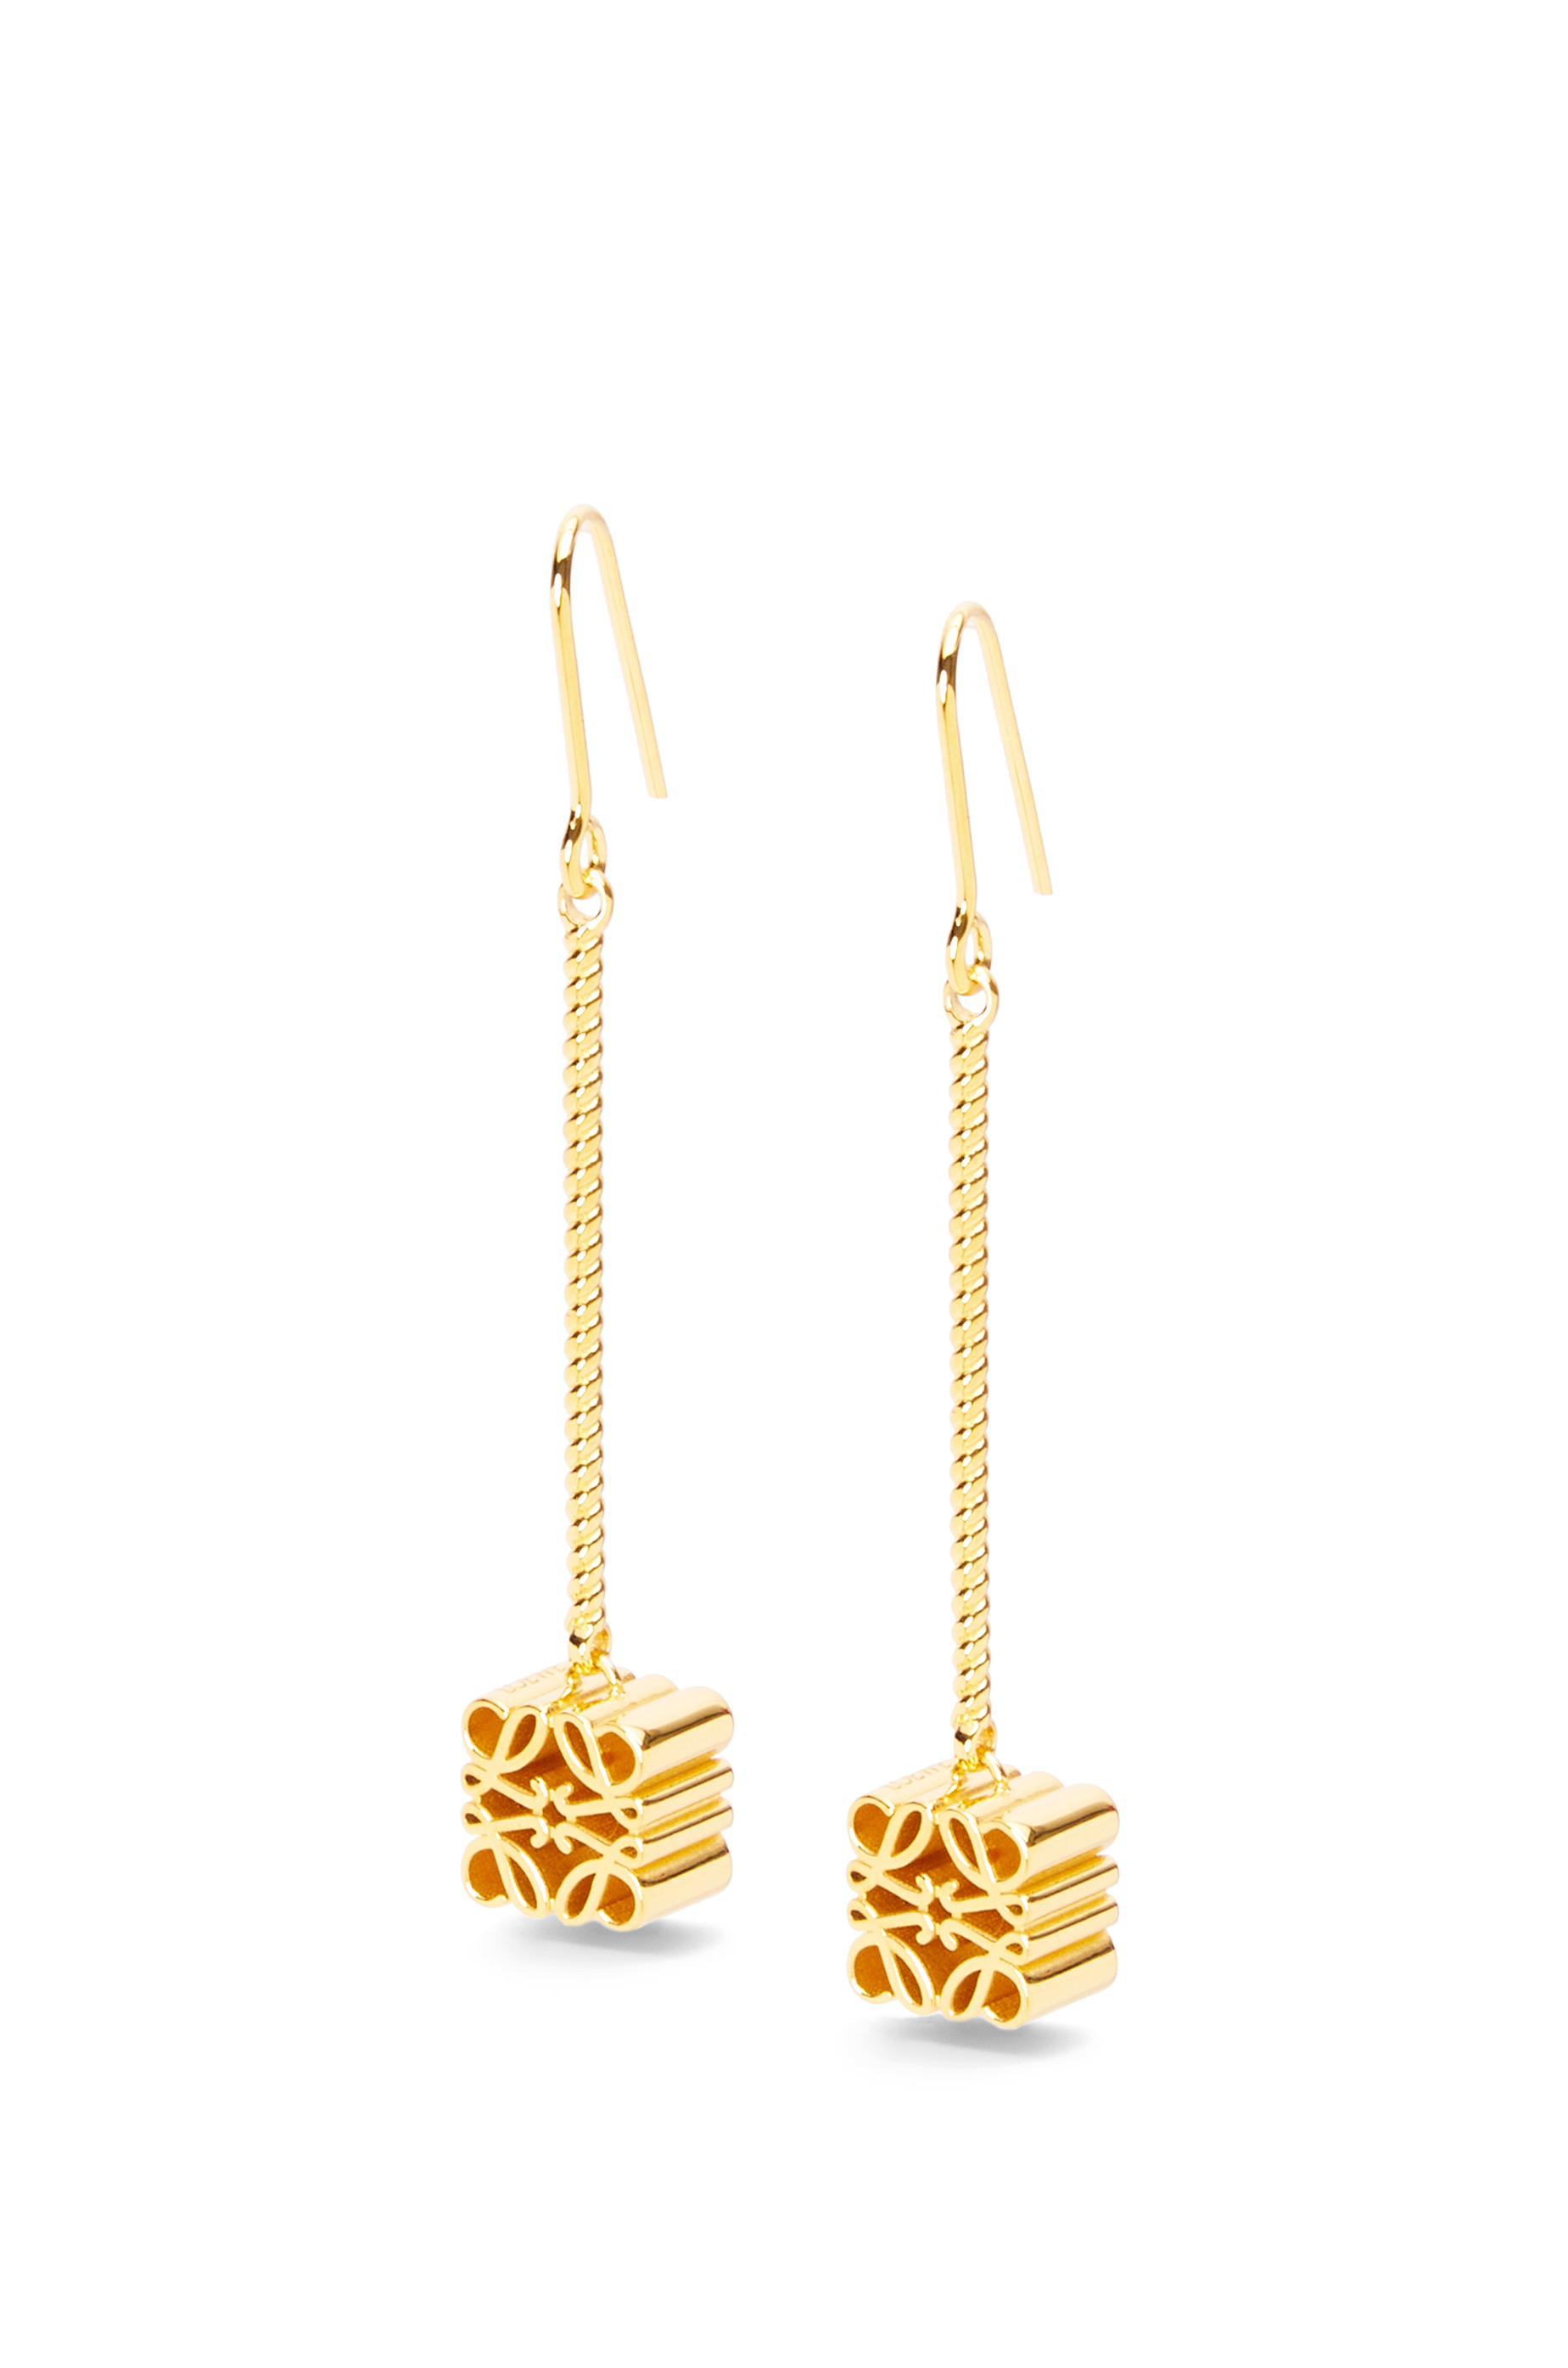 Foundation 18K Yellow Gold Pyramid Stud Earrings | Gold Stud Earrings 18K |  Cadar – CADAR